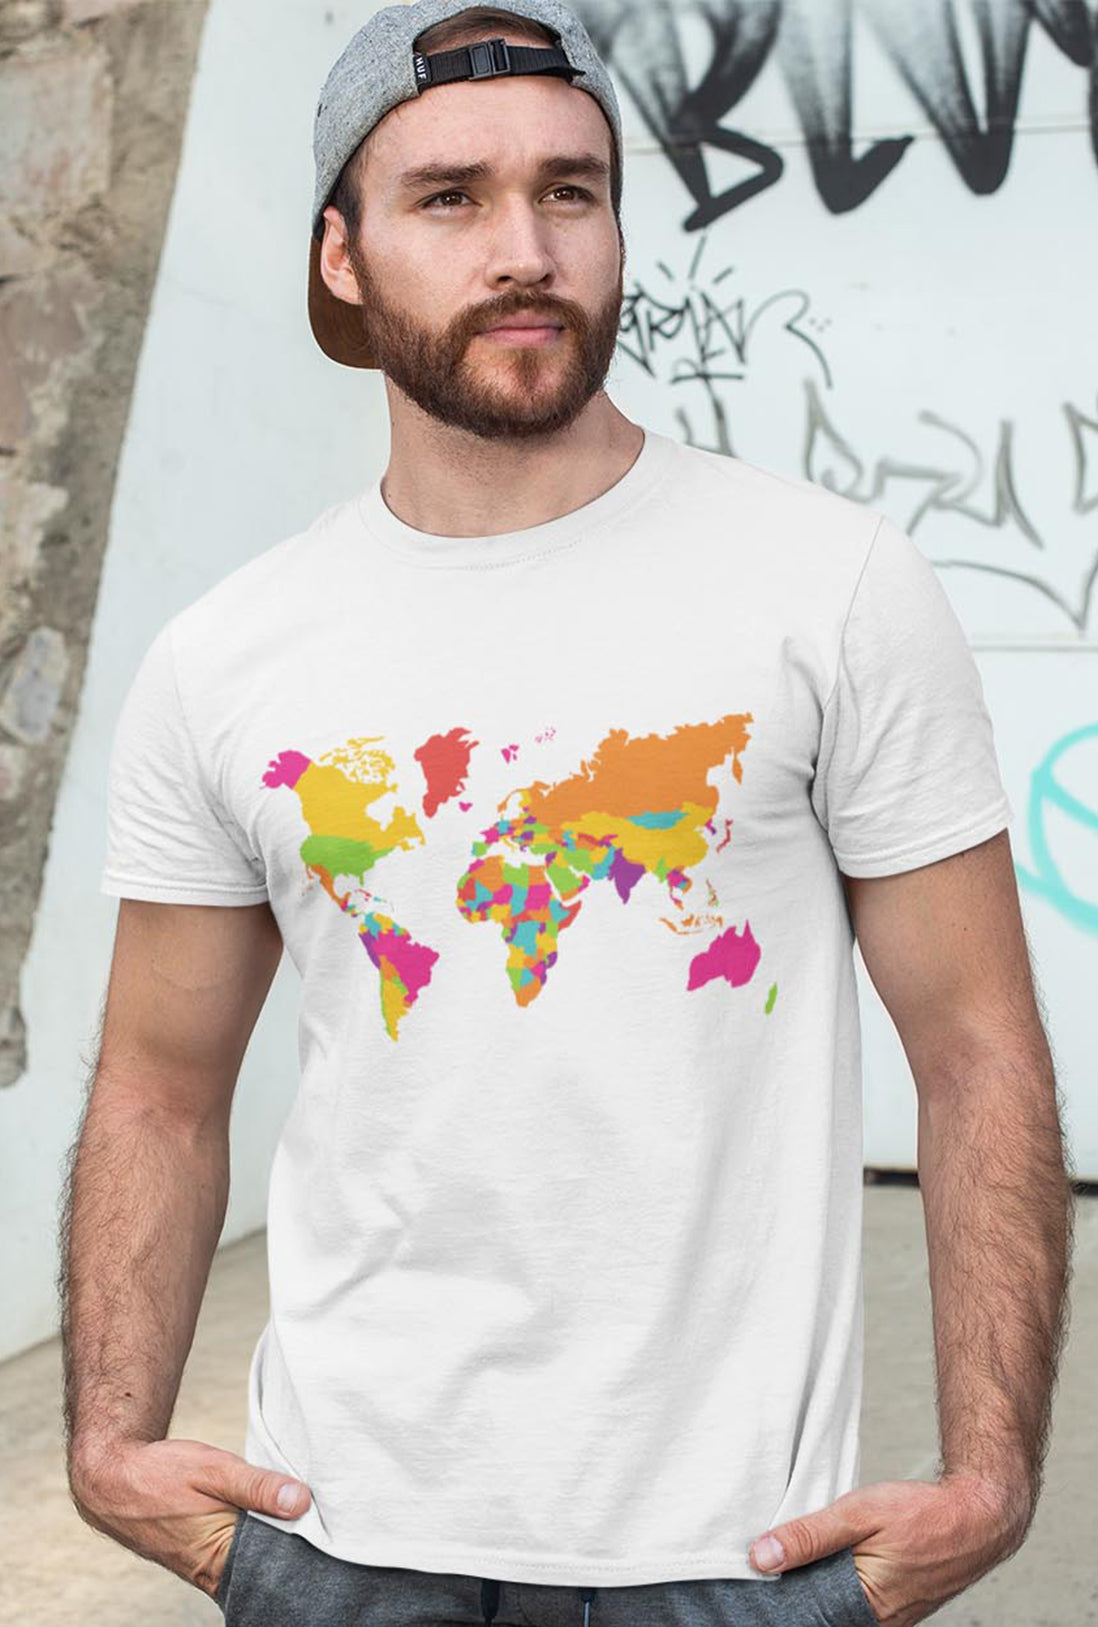 World Atlas Men's Cotton T-Shirt